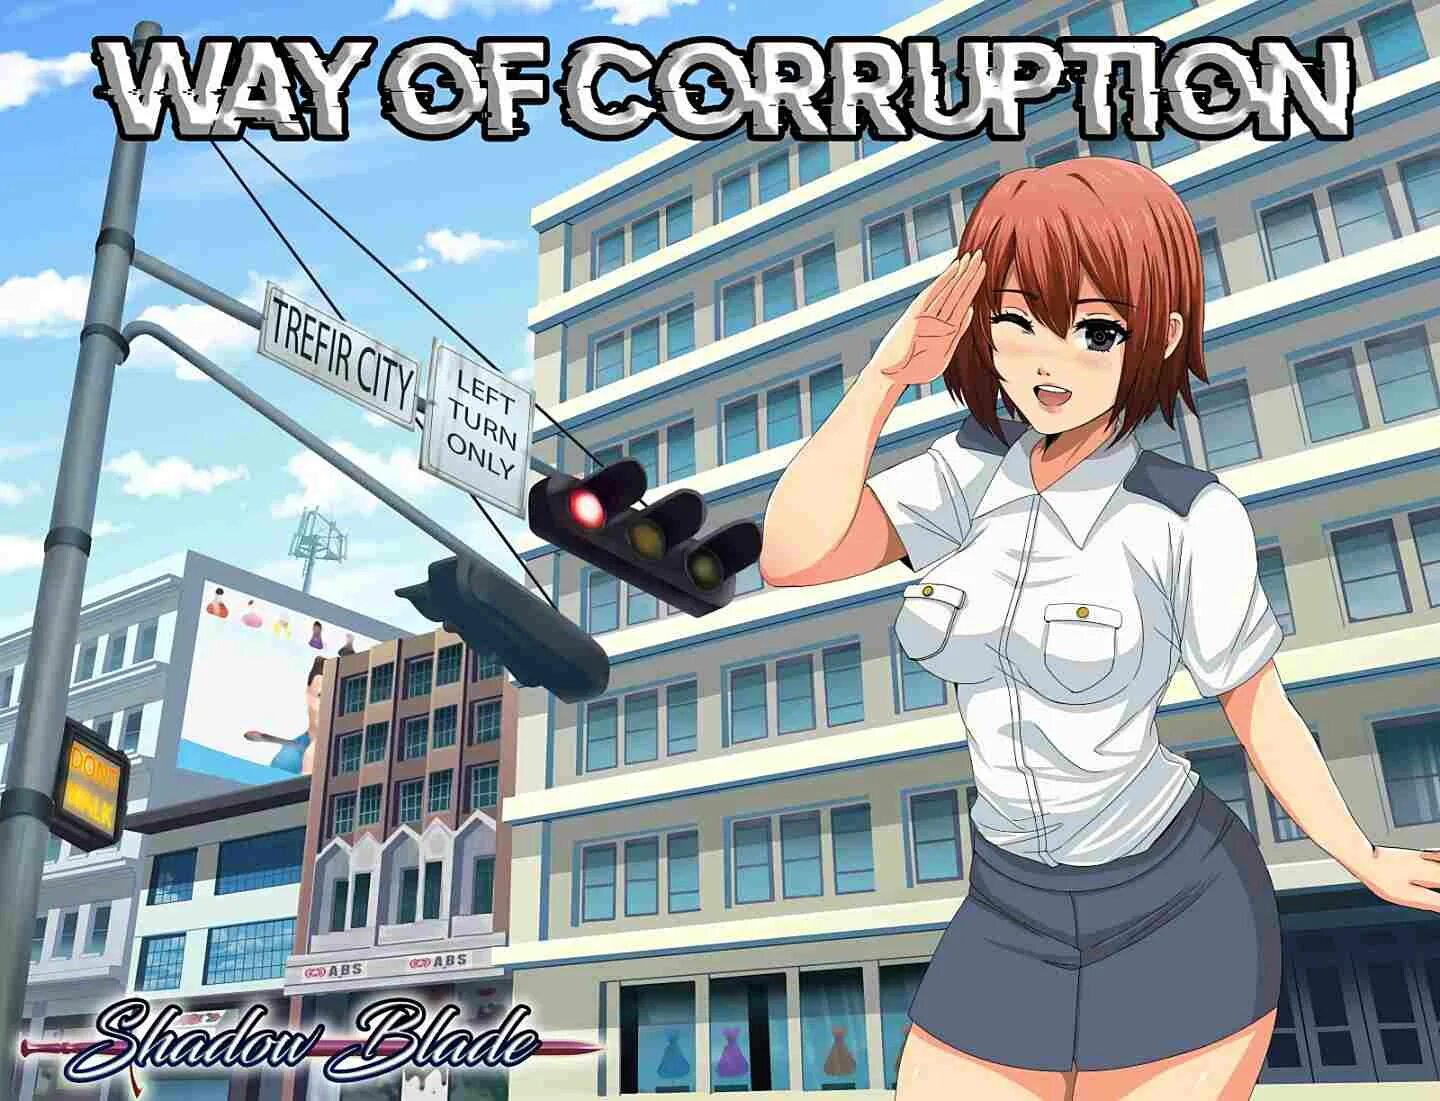 Corruption town 0.4. Way of corruption. Corruption игра. Agency of corruption игра. H-game коррупция.